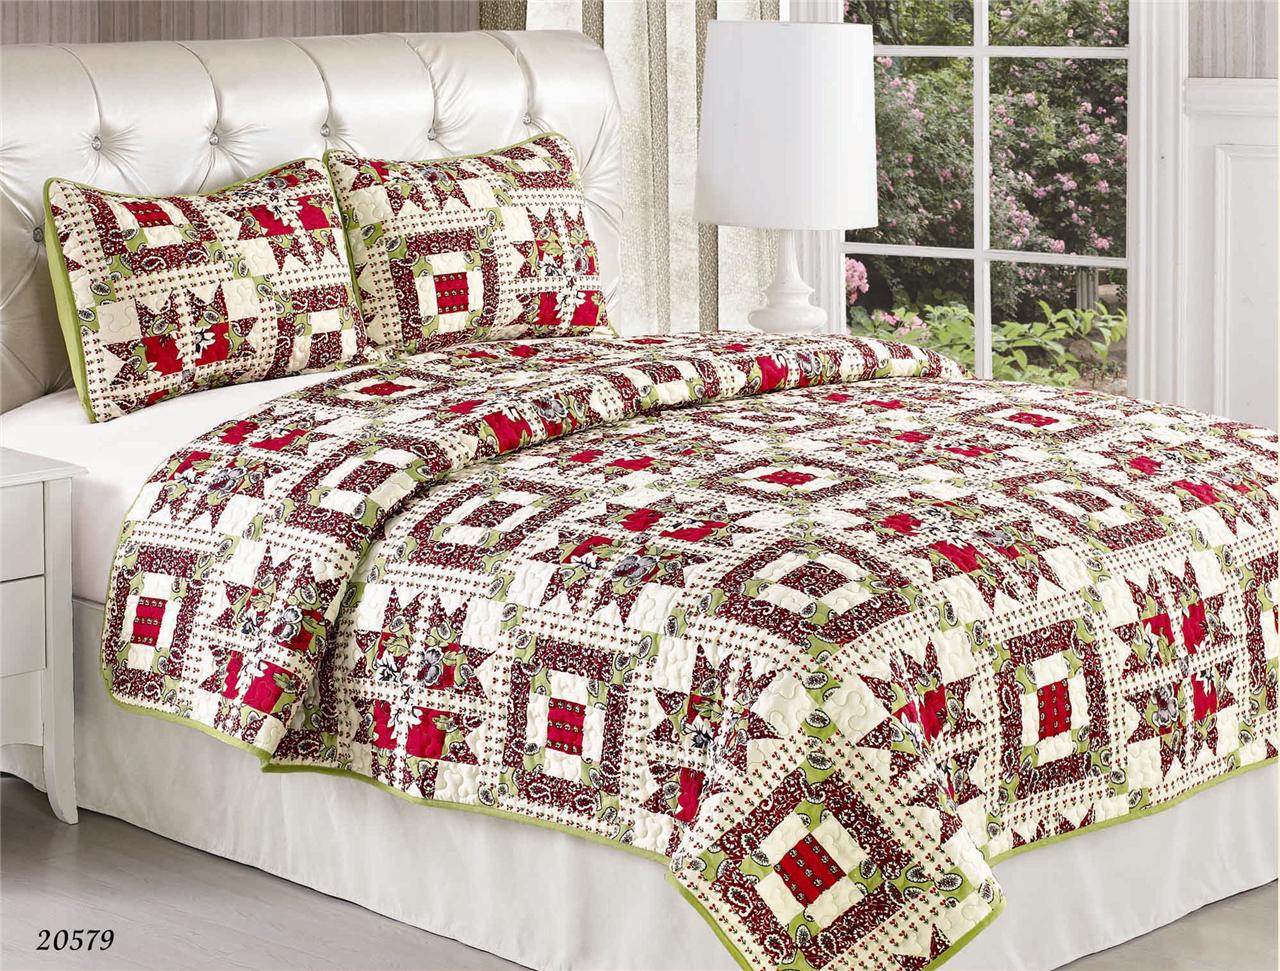 Promotion Sale New 3PC Red Cherry Comforter Bedspread Quilt QUEEN SET Bedding | eBay